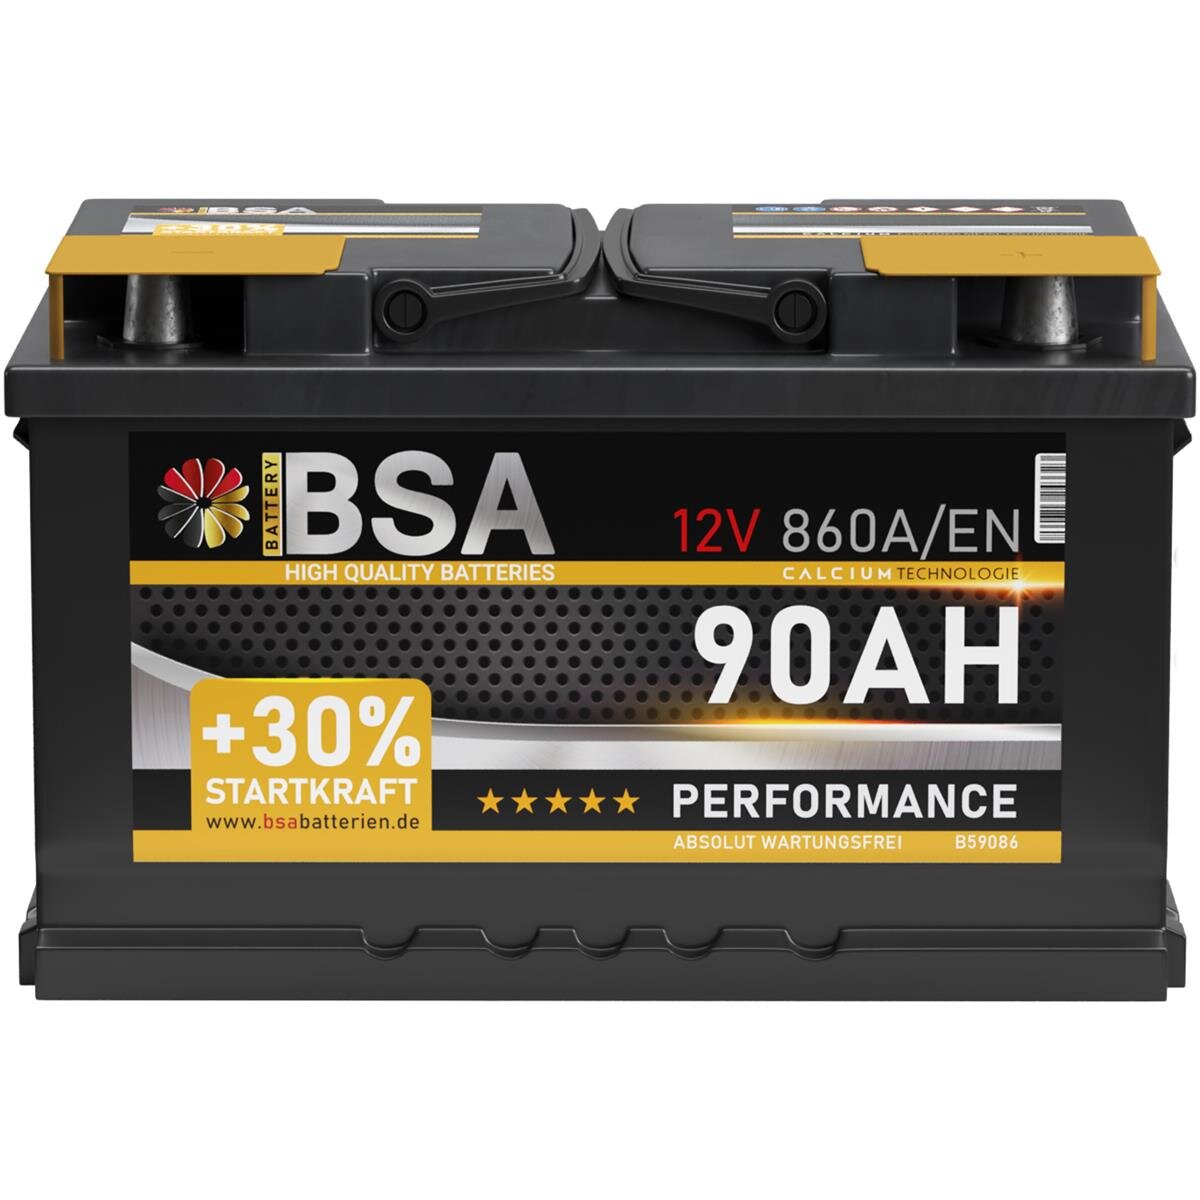 https://www.batteriescout.de/media/image/product/7846/lg/bsa-performance-autobatterie-90ah-12v.jpg